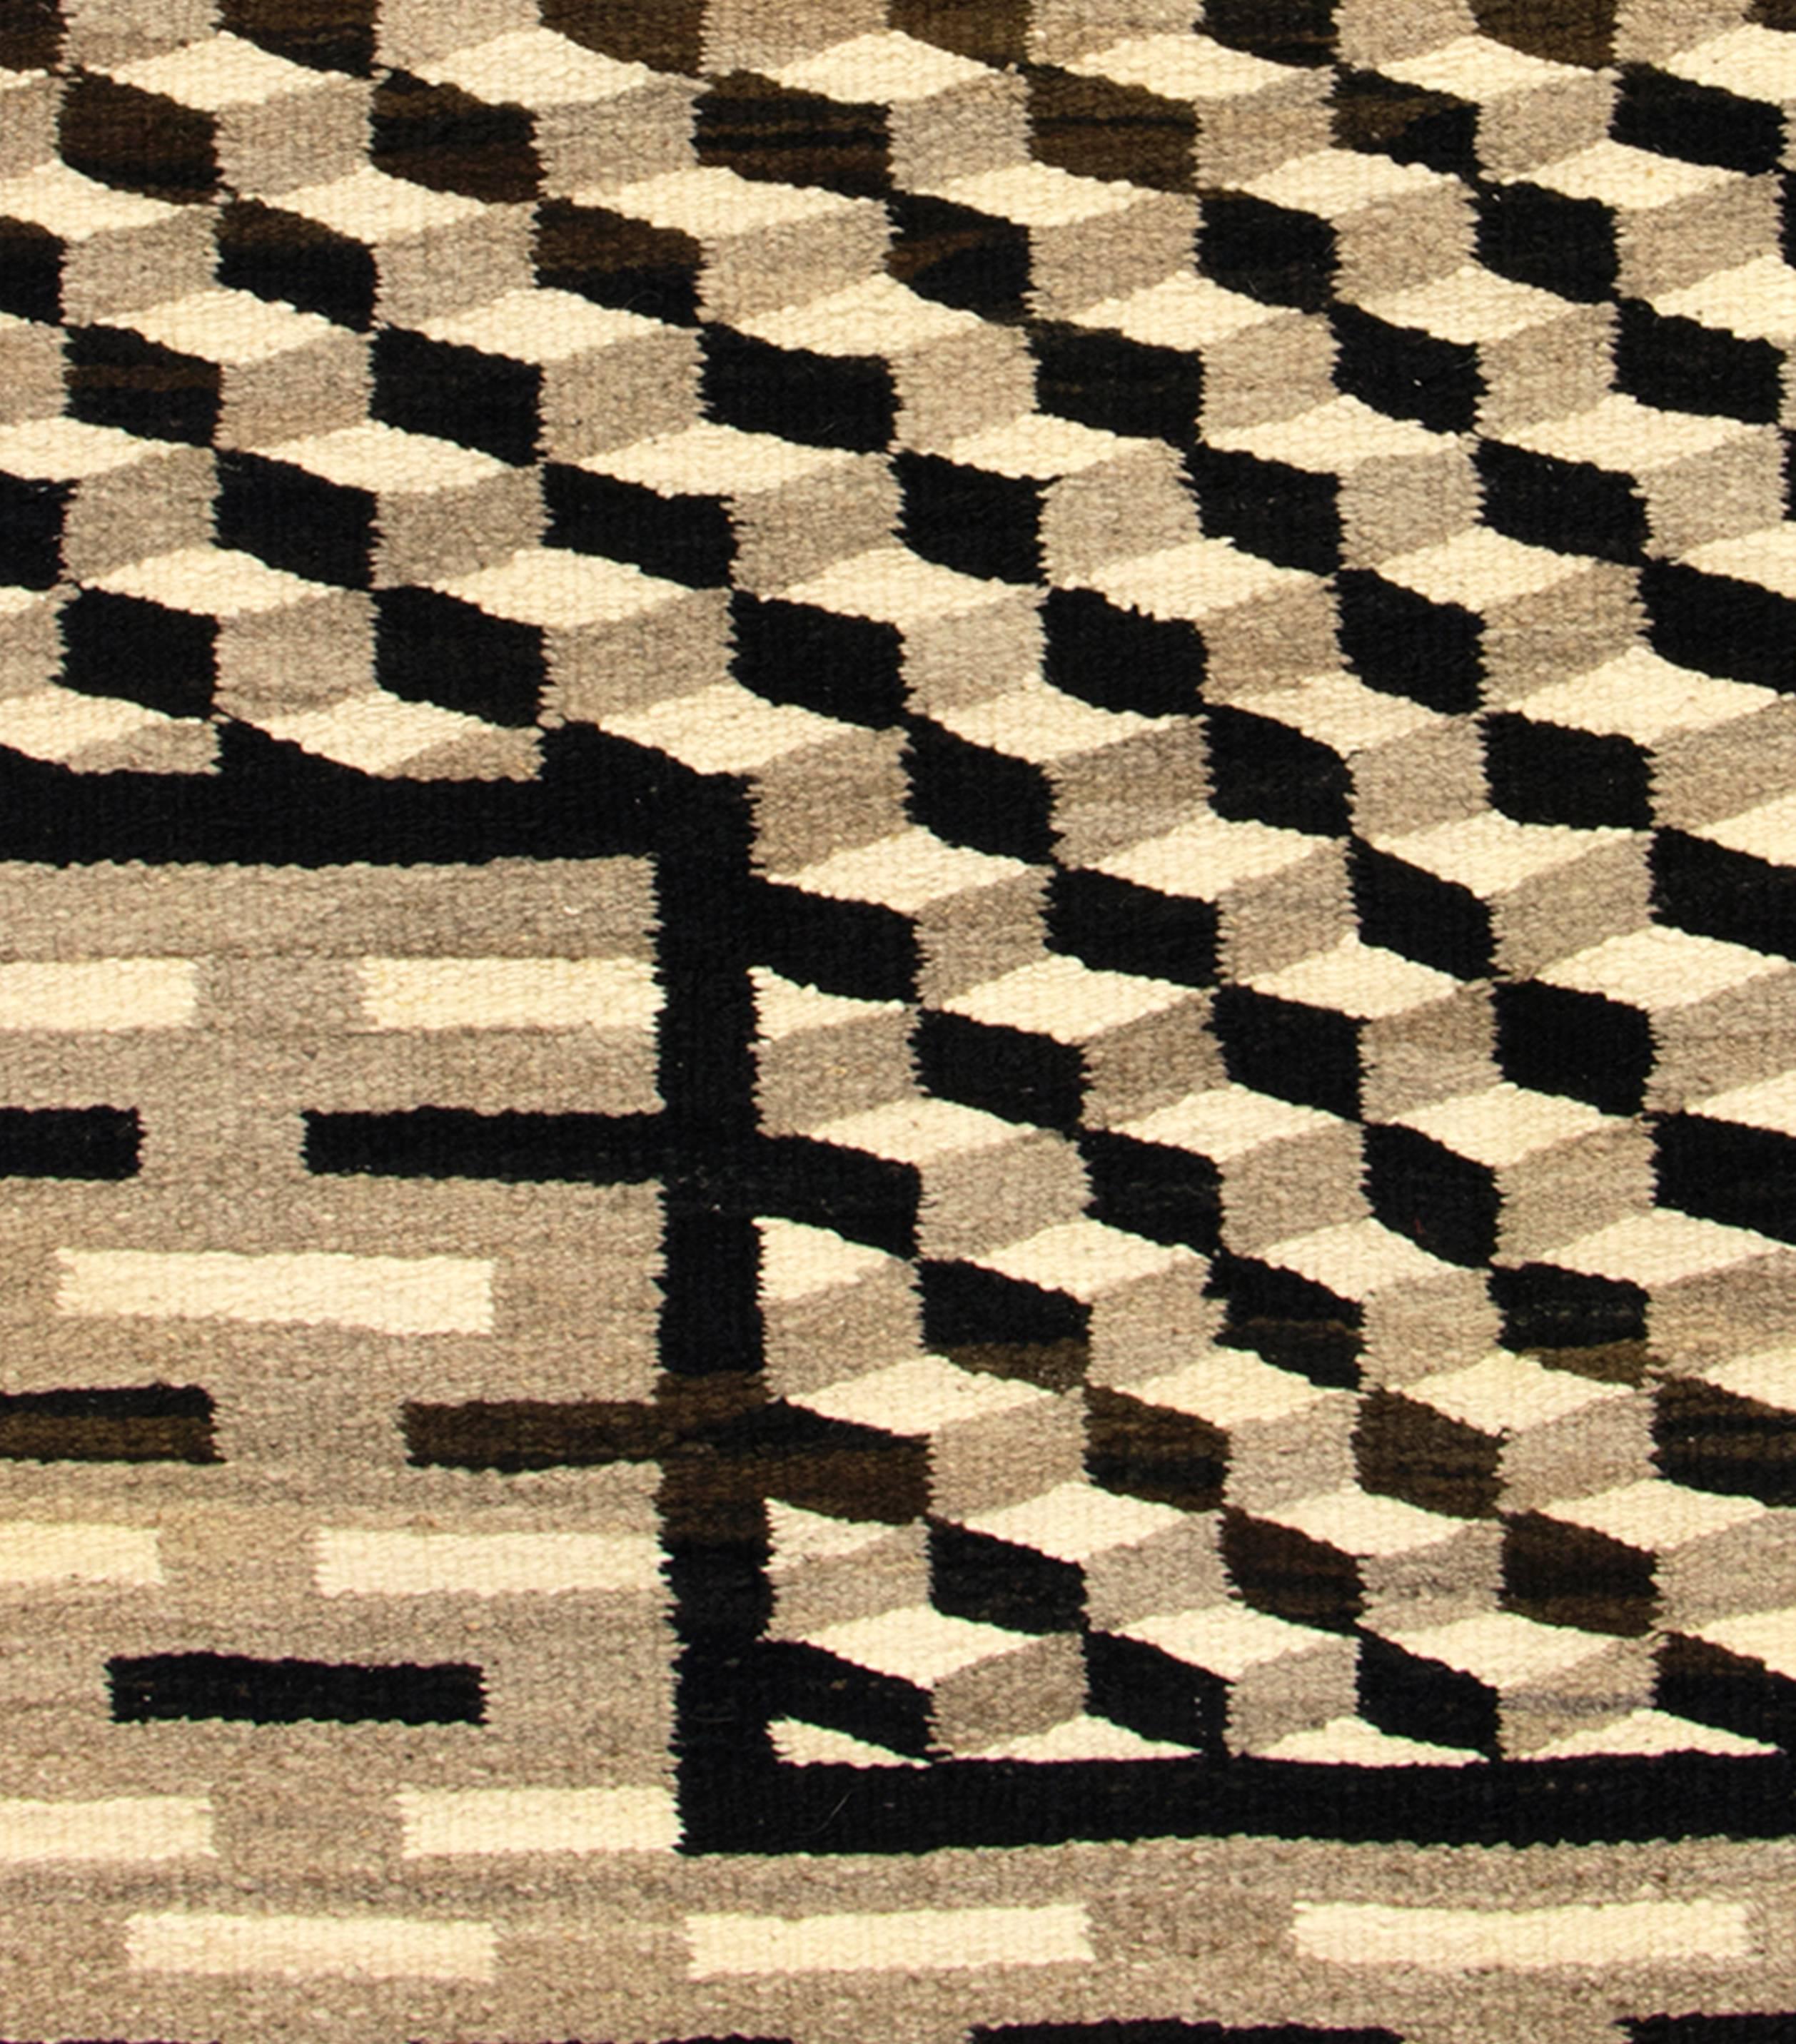 Woven Vintage Navajo Optical 'Tumbling Block' Weaving or Rug, circa 1940